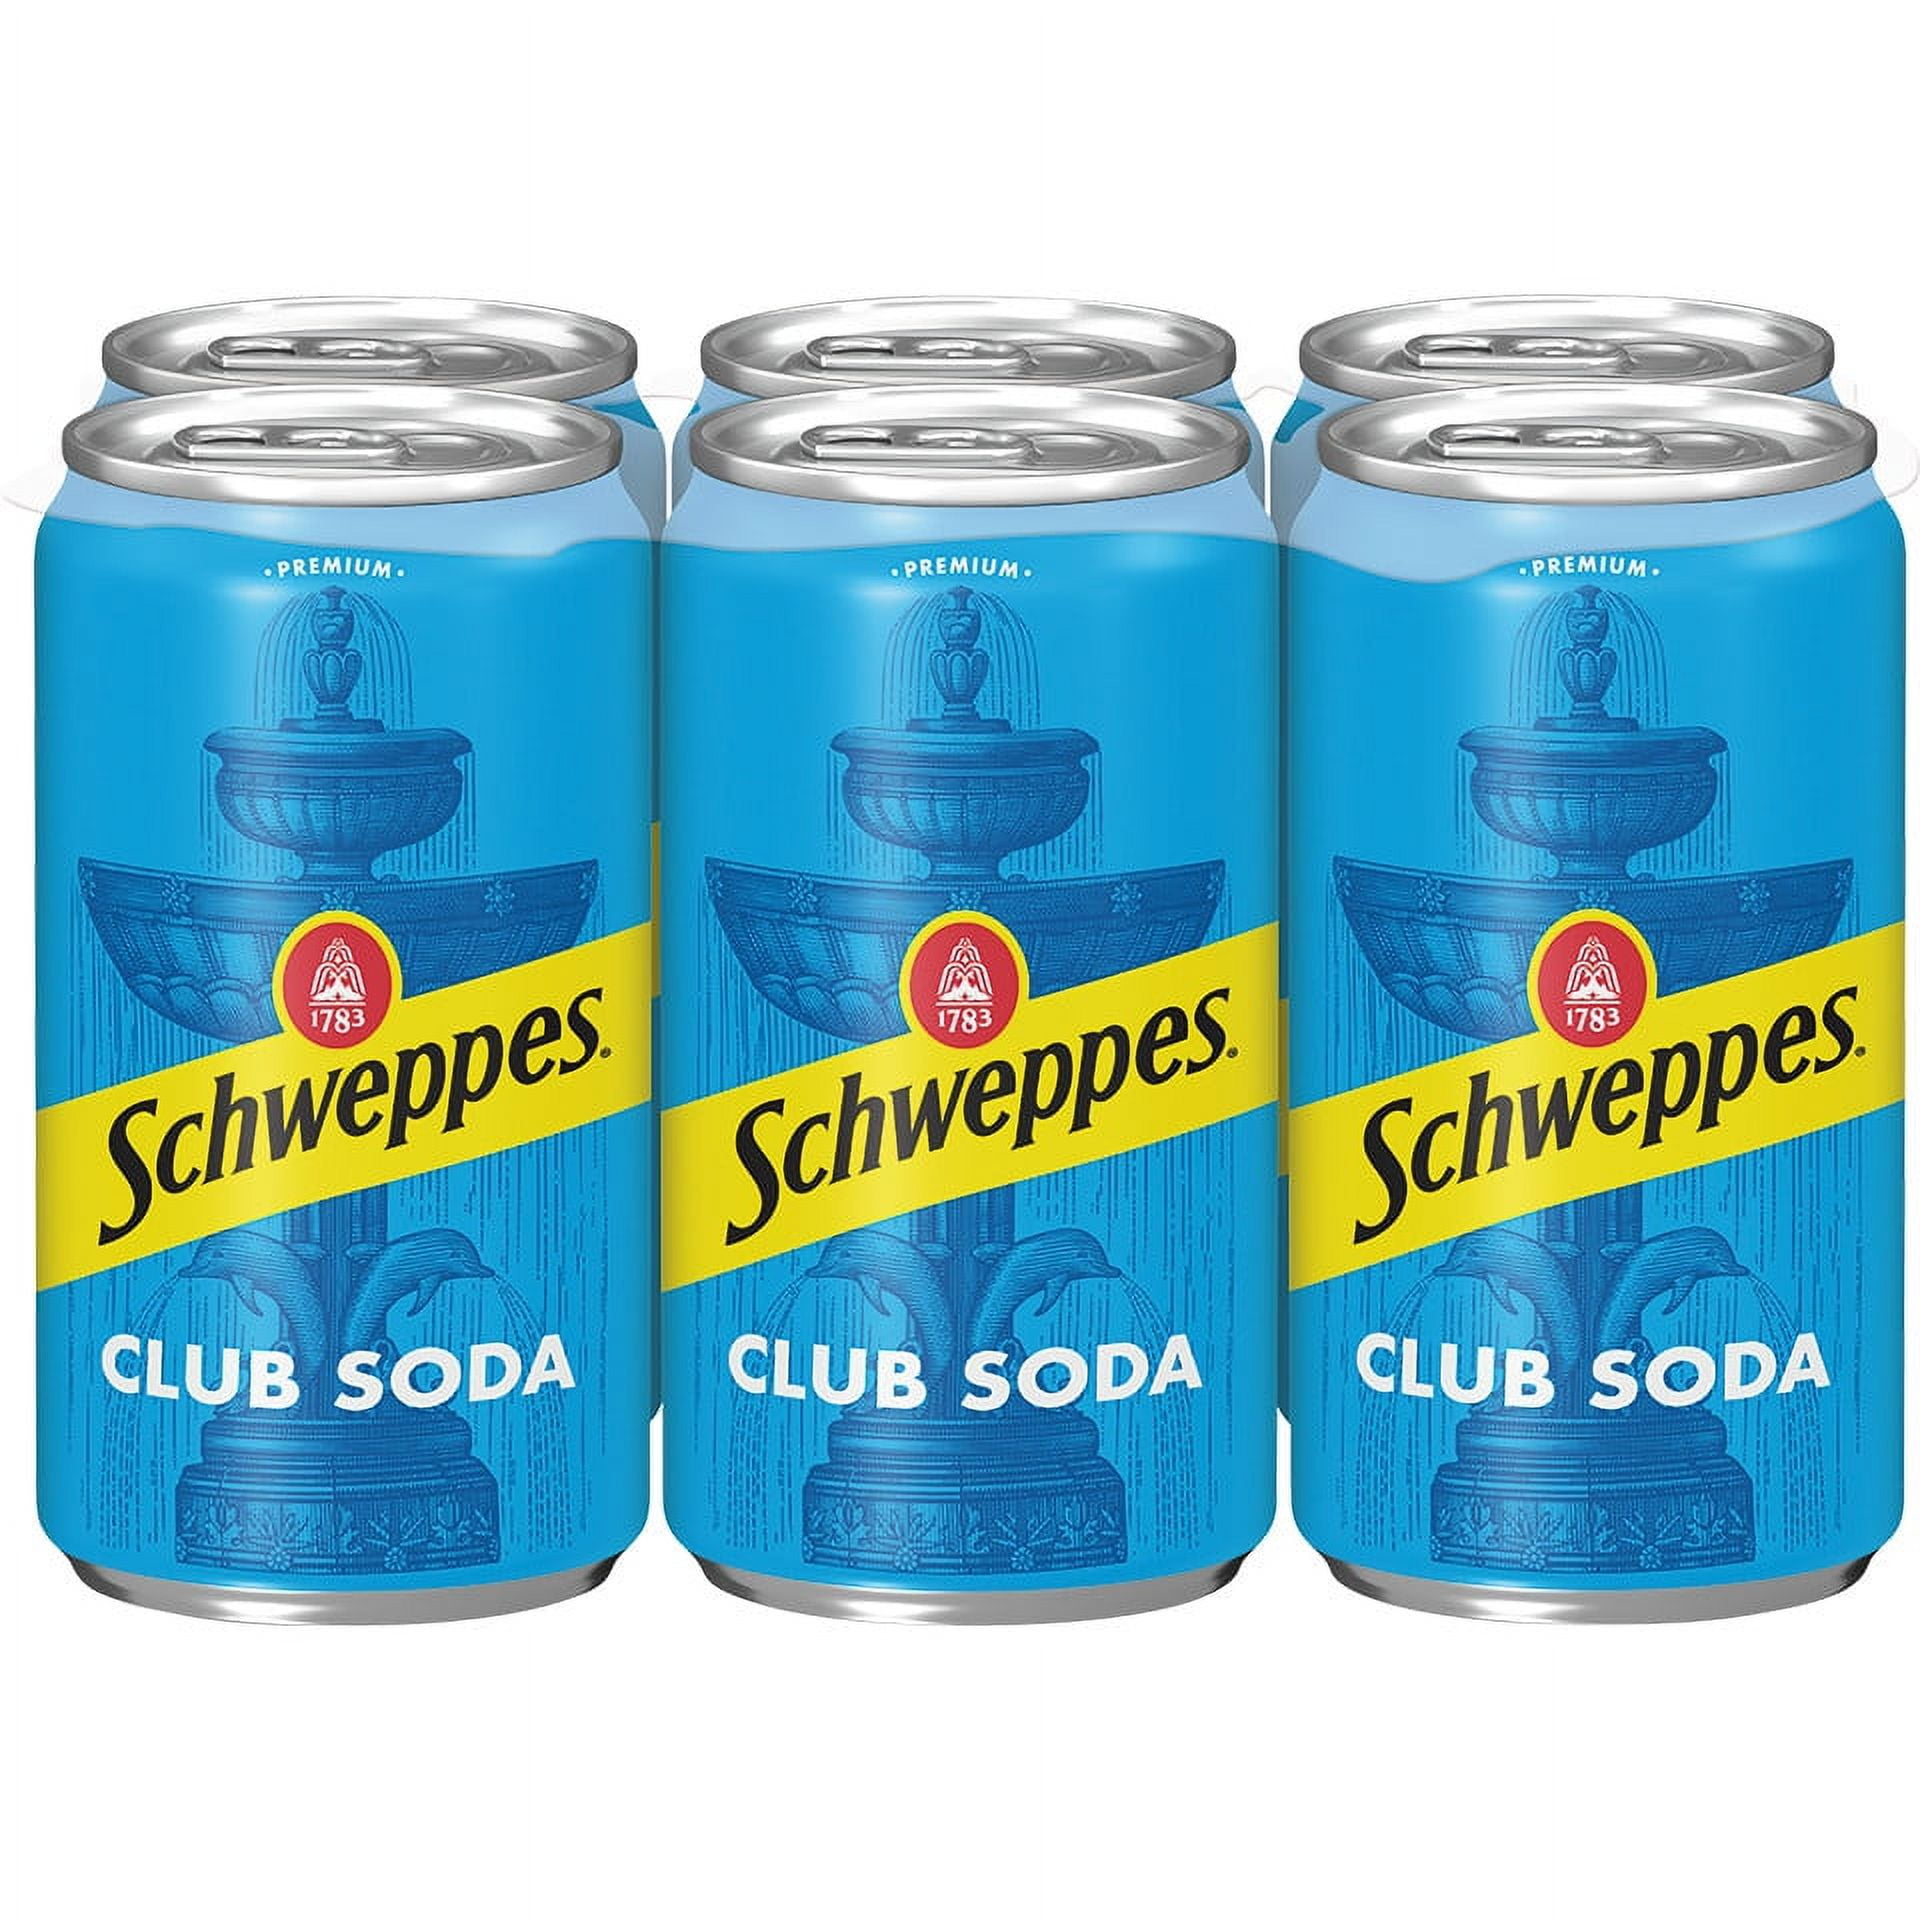 Lleva a domicilio el Dúo Pack de Schweppes Soda de 1.5 L